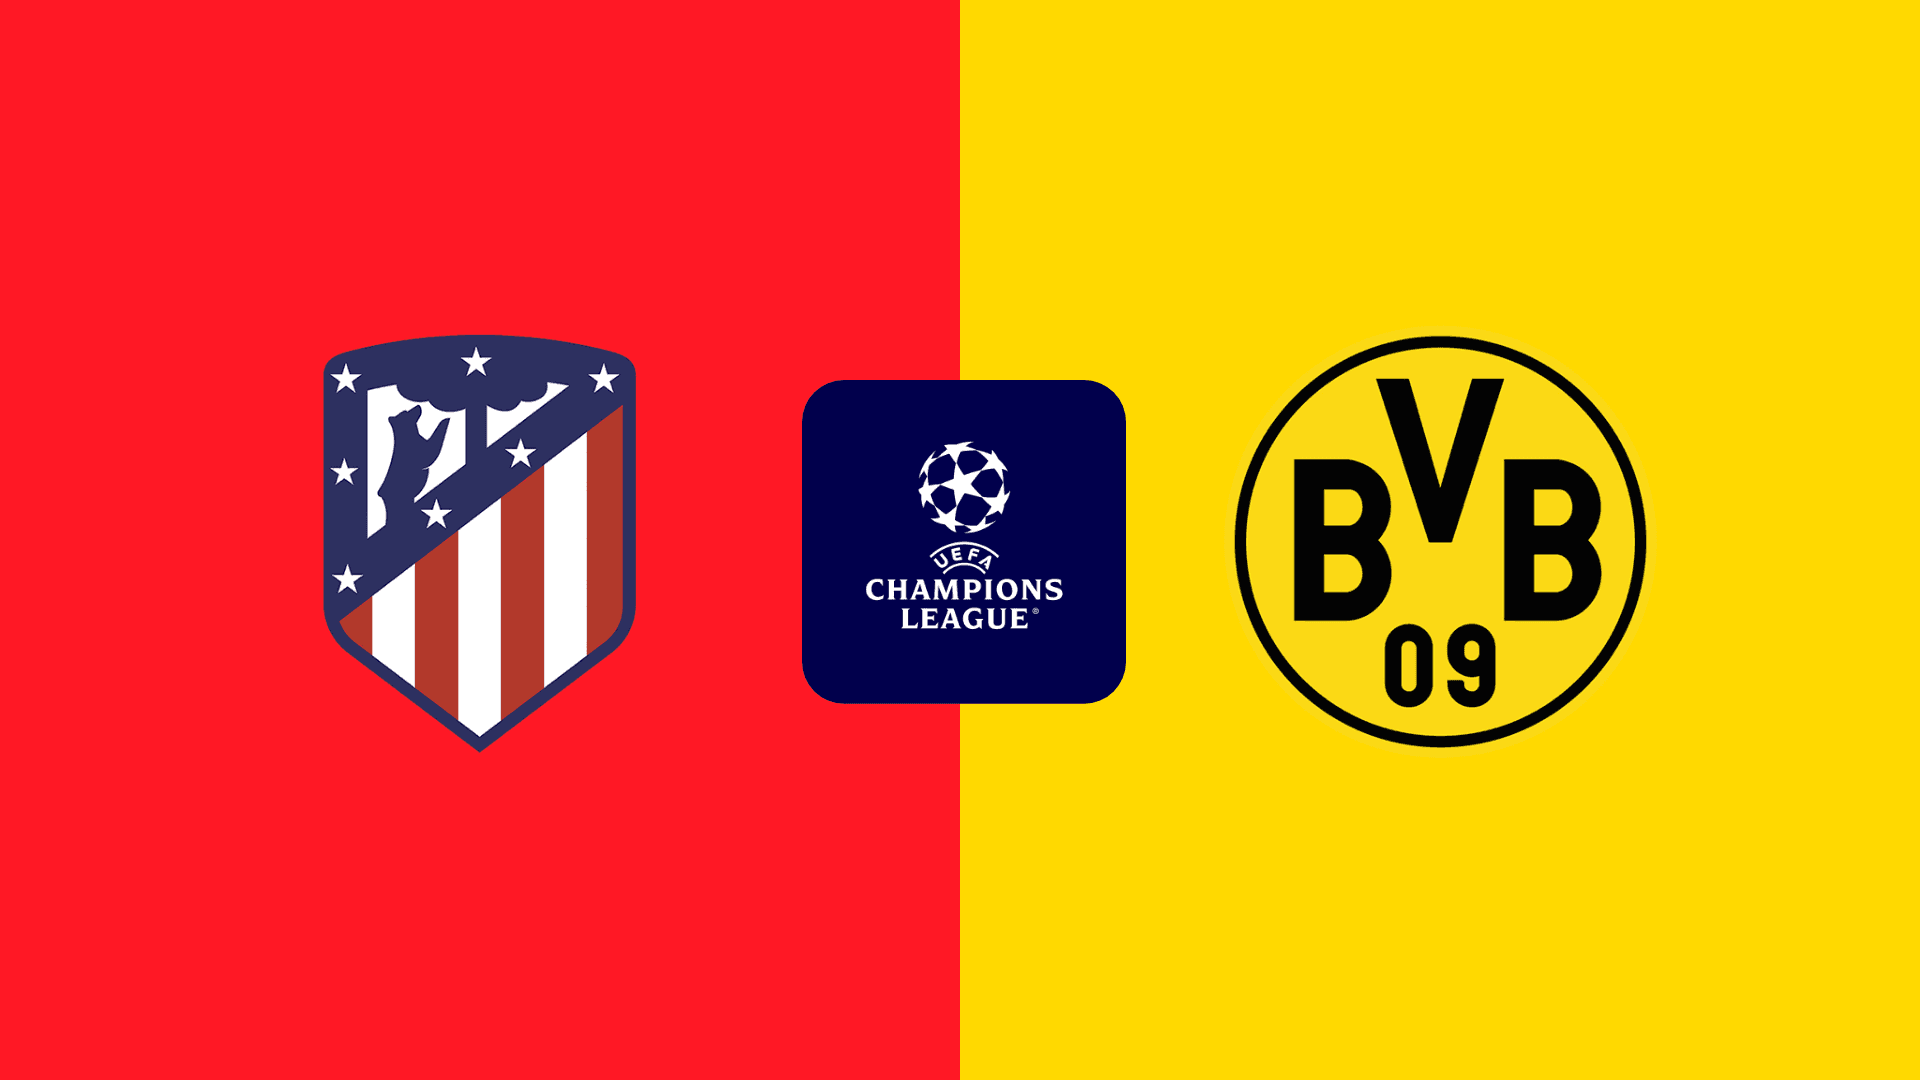 UEFA Champions League – Atletico Madrid vs Dortmund (10 April, 21:00)